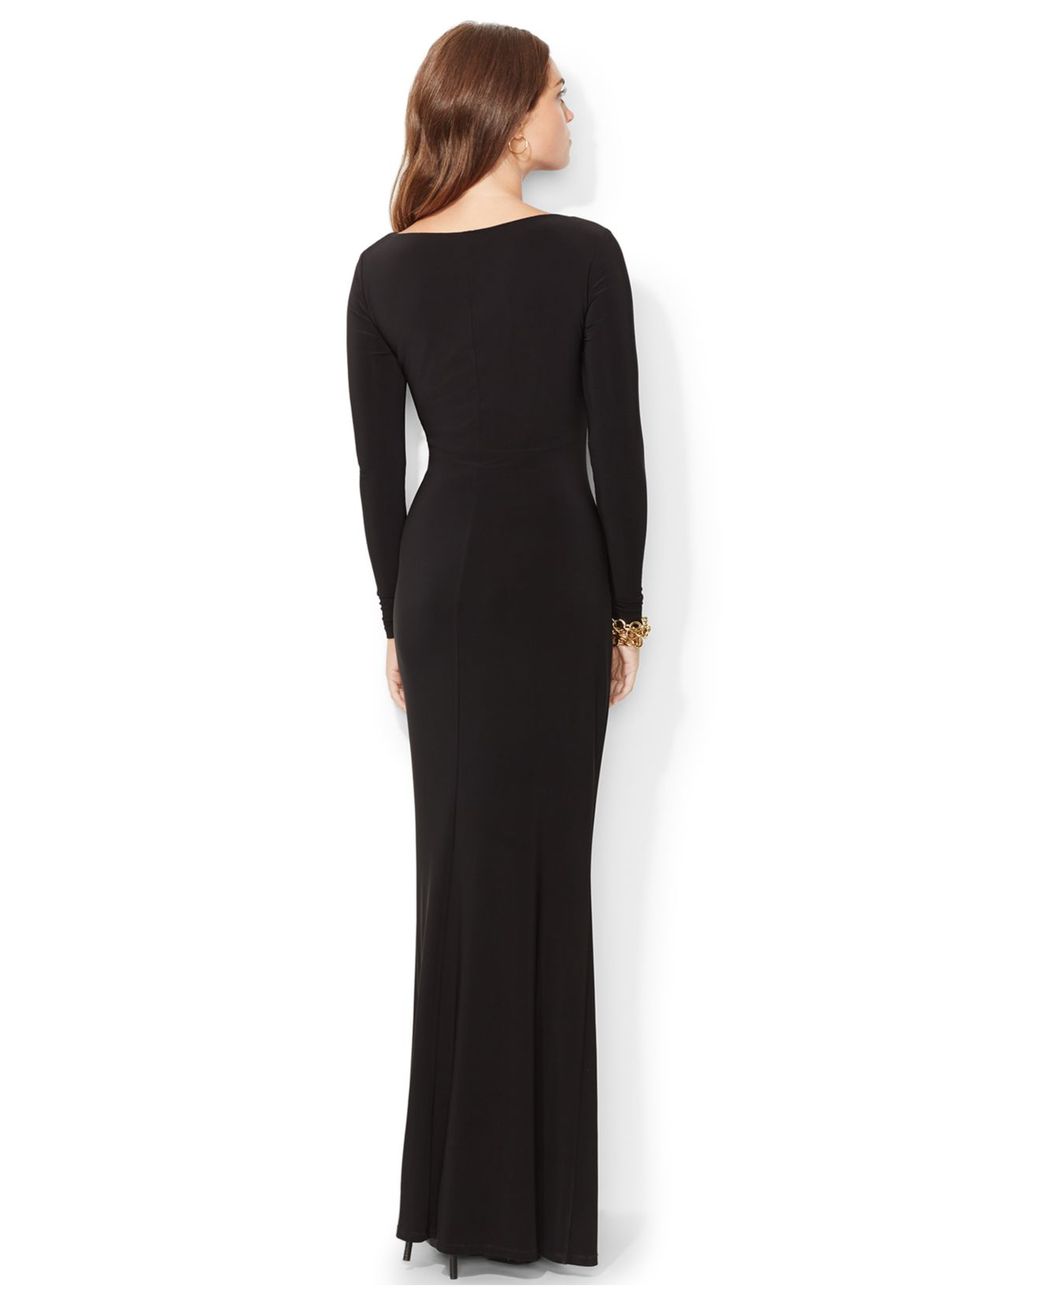 Ralph Lauren Women's Size 4 Long Sleeve Solid Black Elegant Dress 9699